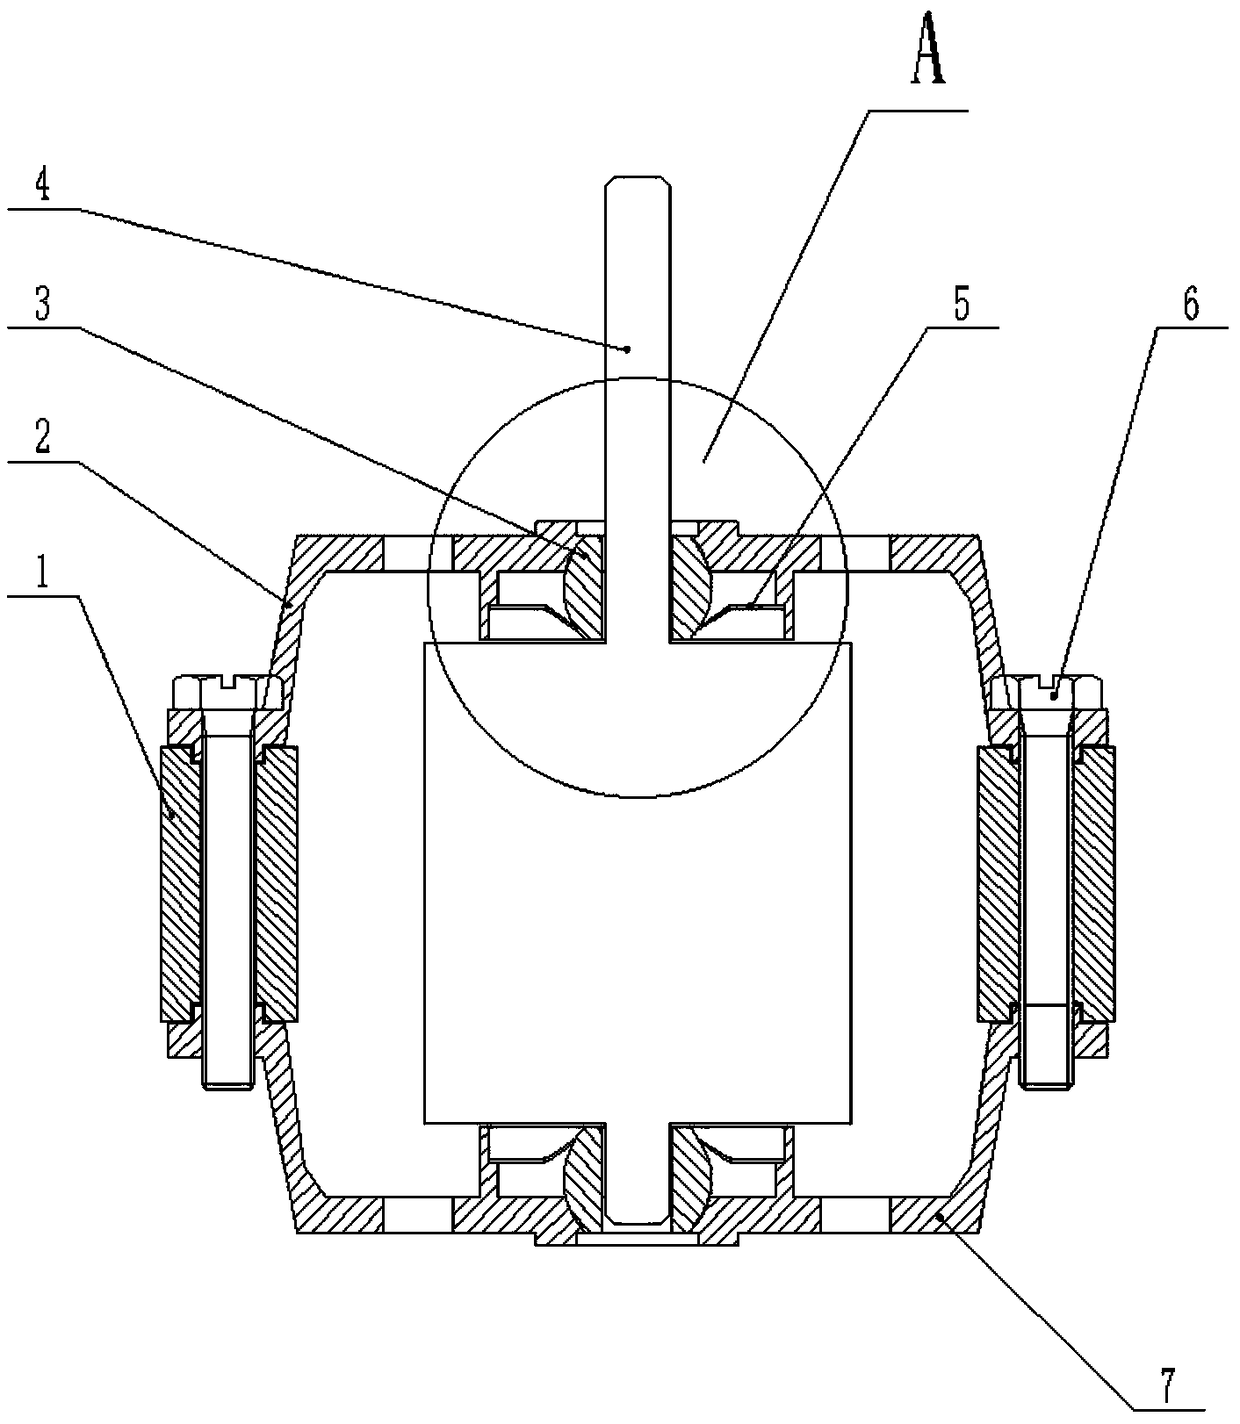 Small-power motor